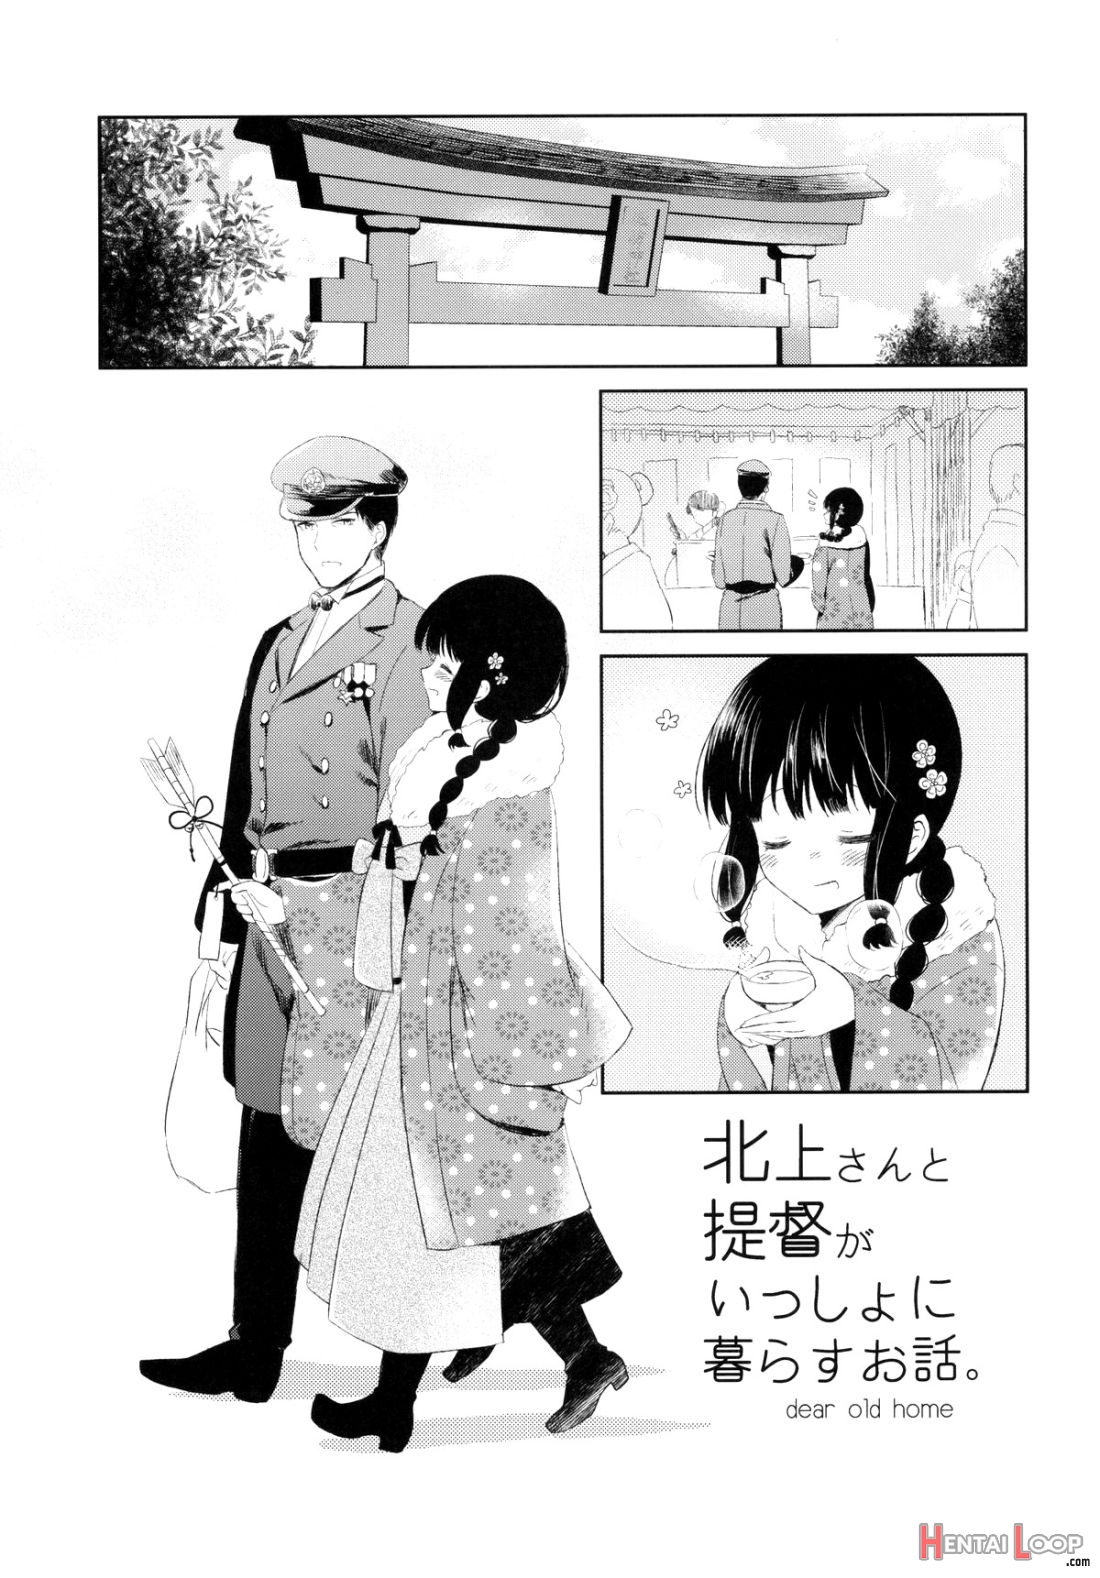 Kitakami-san To Teitoku Ga Issho Ni Kurasu Ohanashi. – Dear Old Home page 31